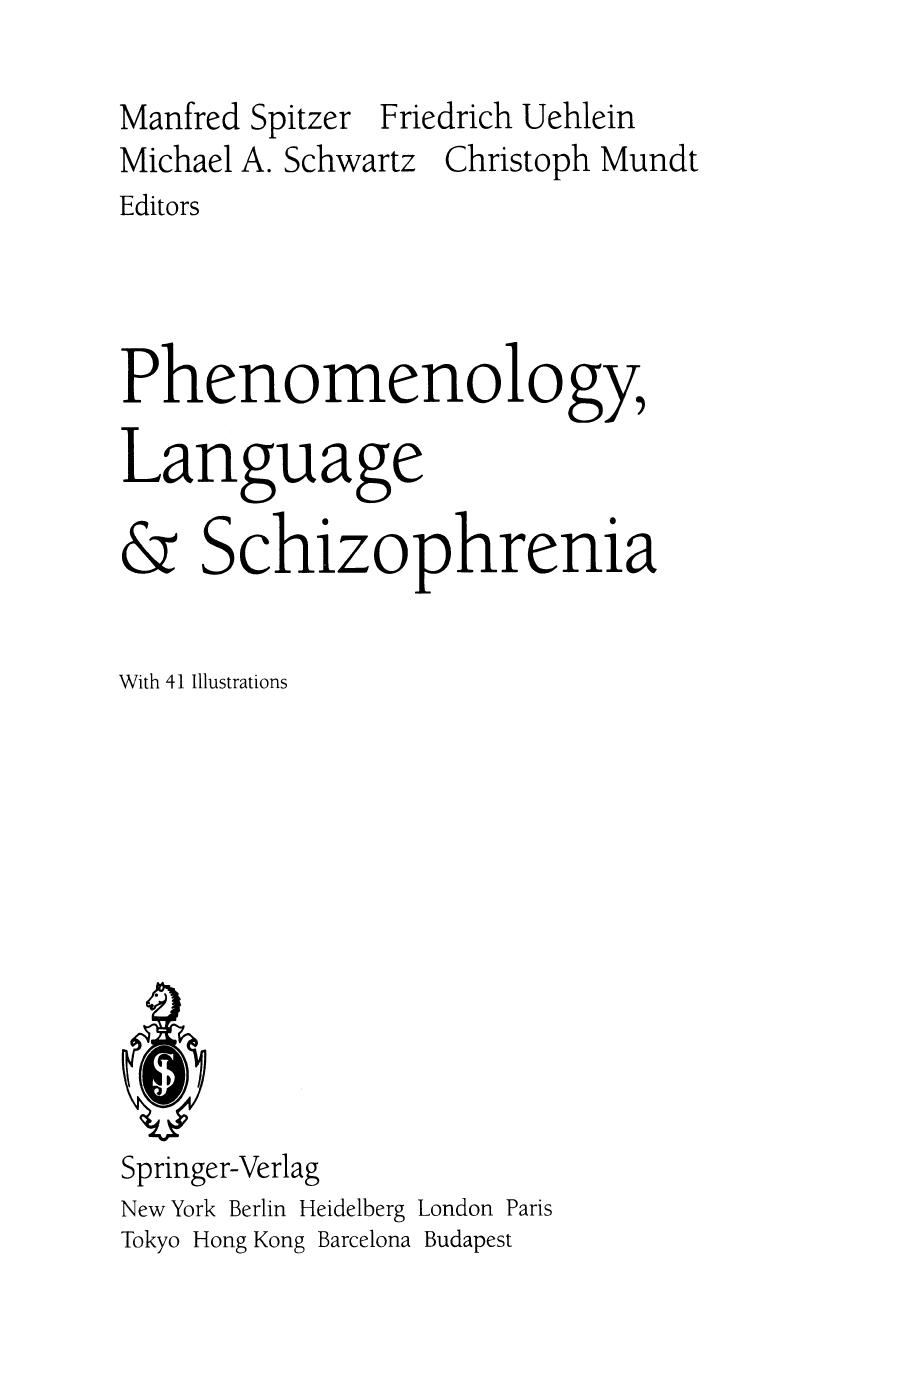 Phenomenology, Language & Schizophrenia